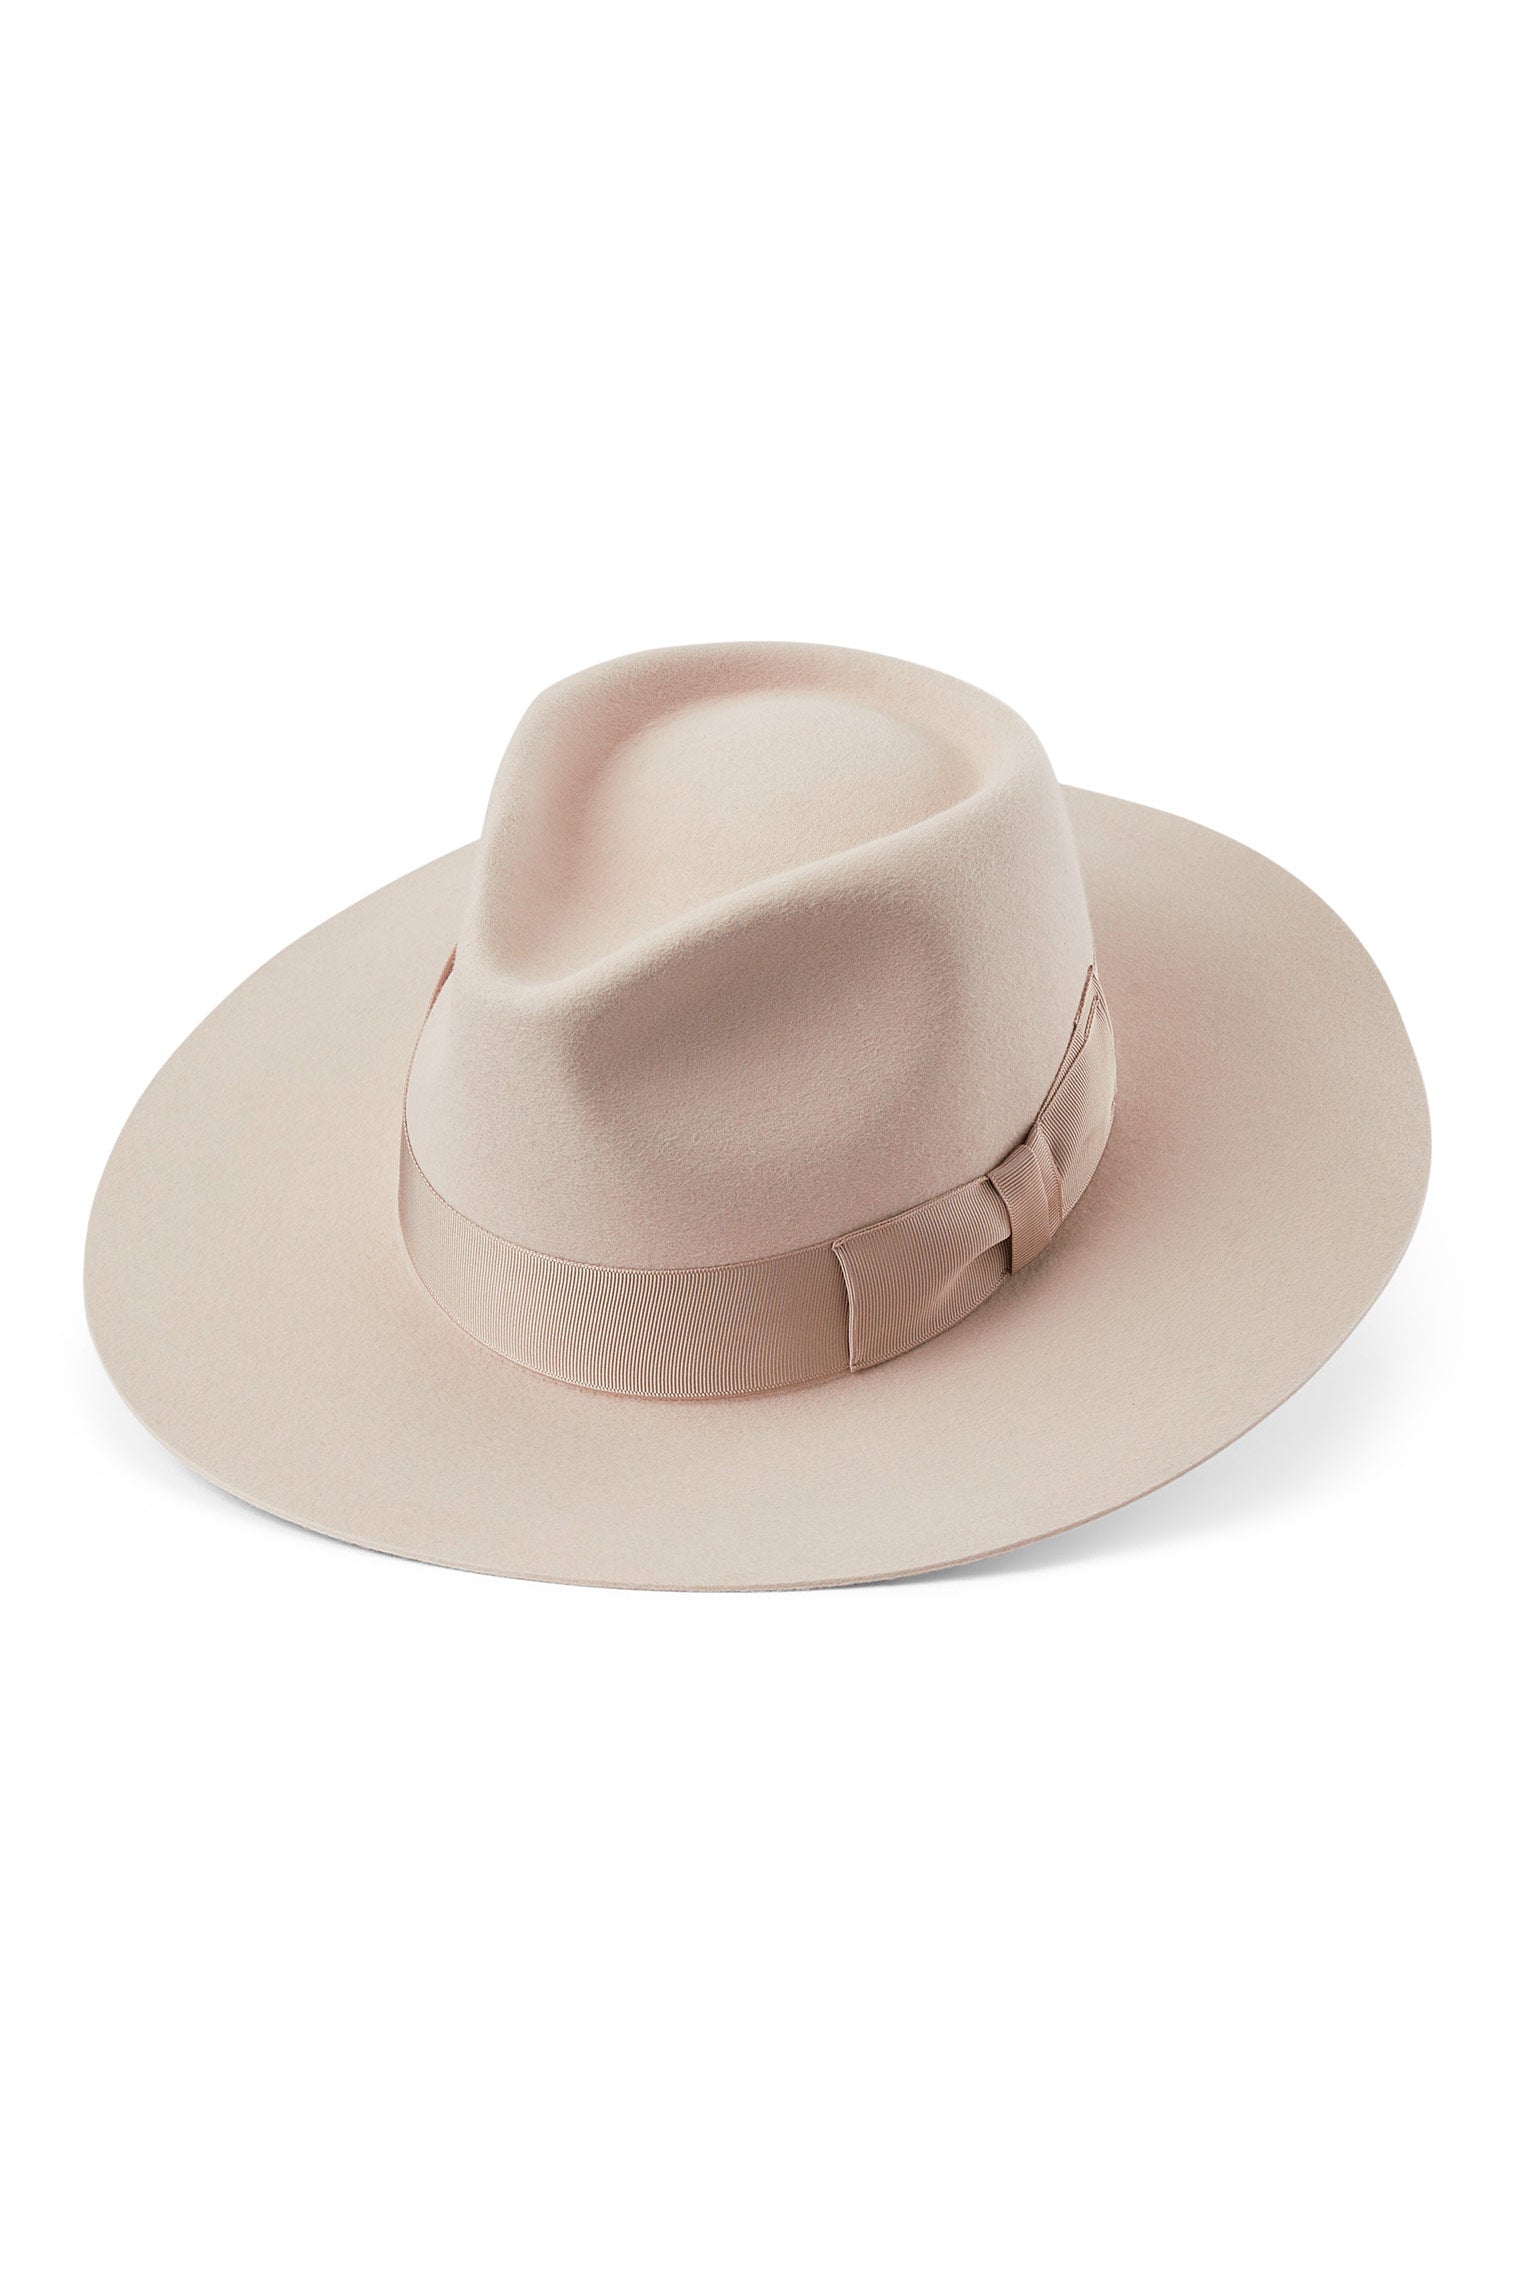 Toni Cream Flat-Brim Fedora - New Season Women's Hats - Lock & Co. Hatters London UK